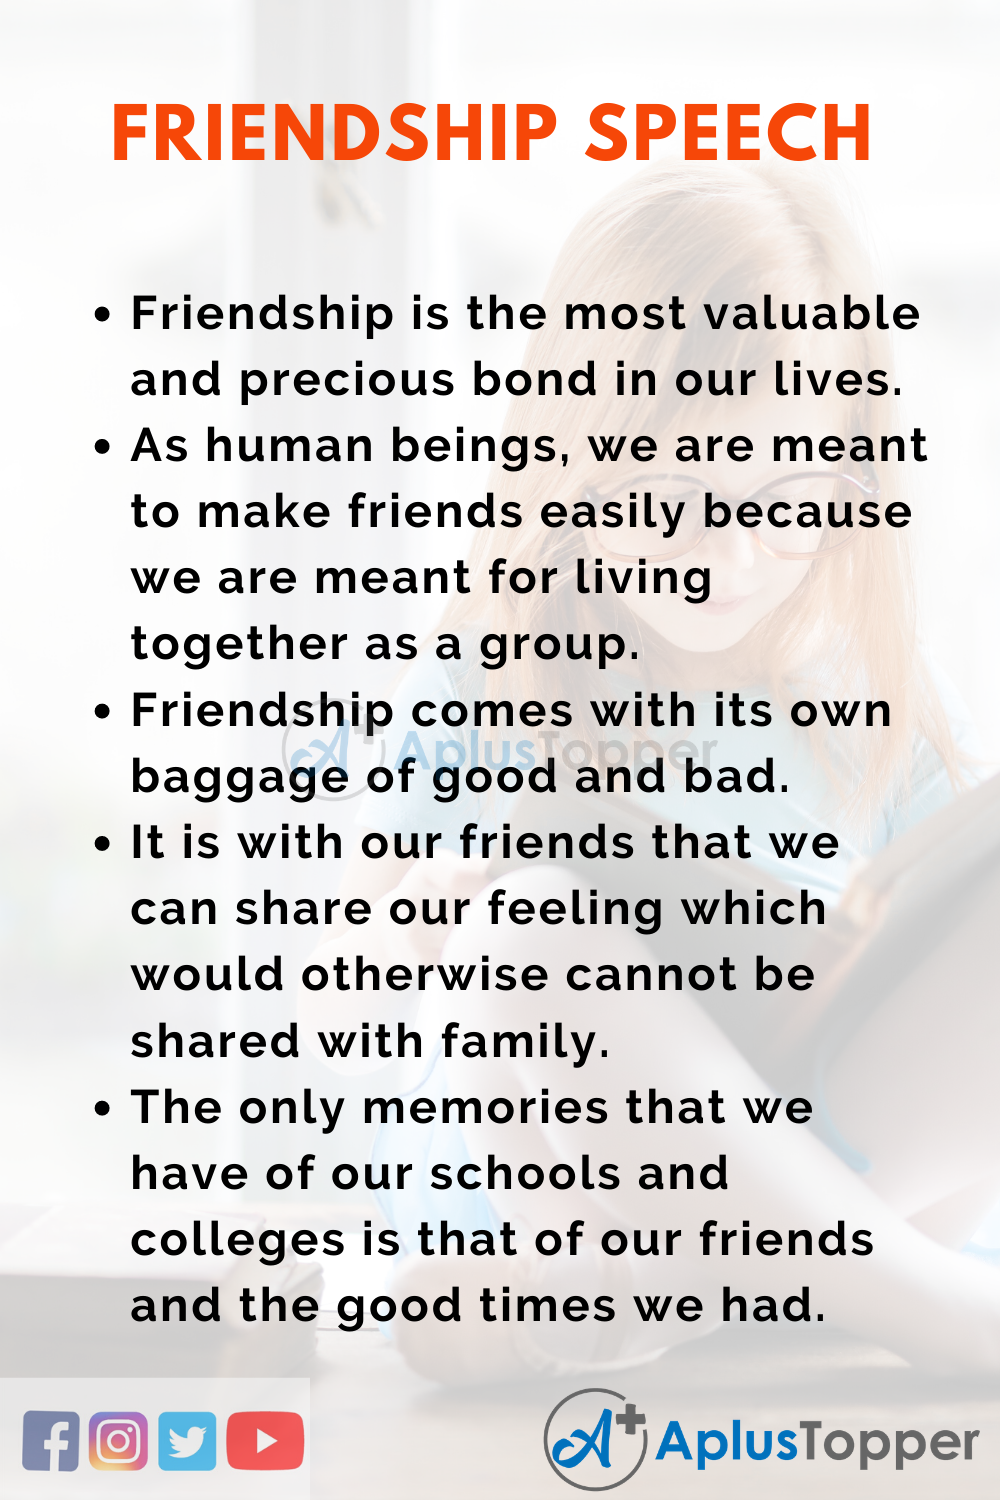 300 words speech about friendship